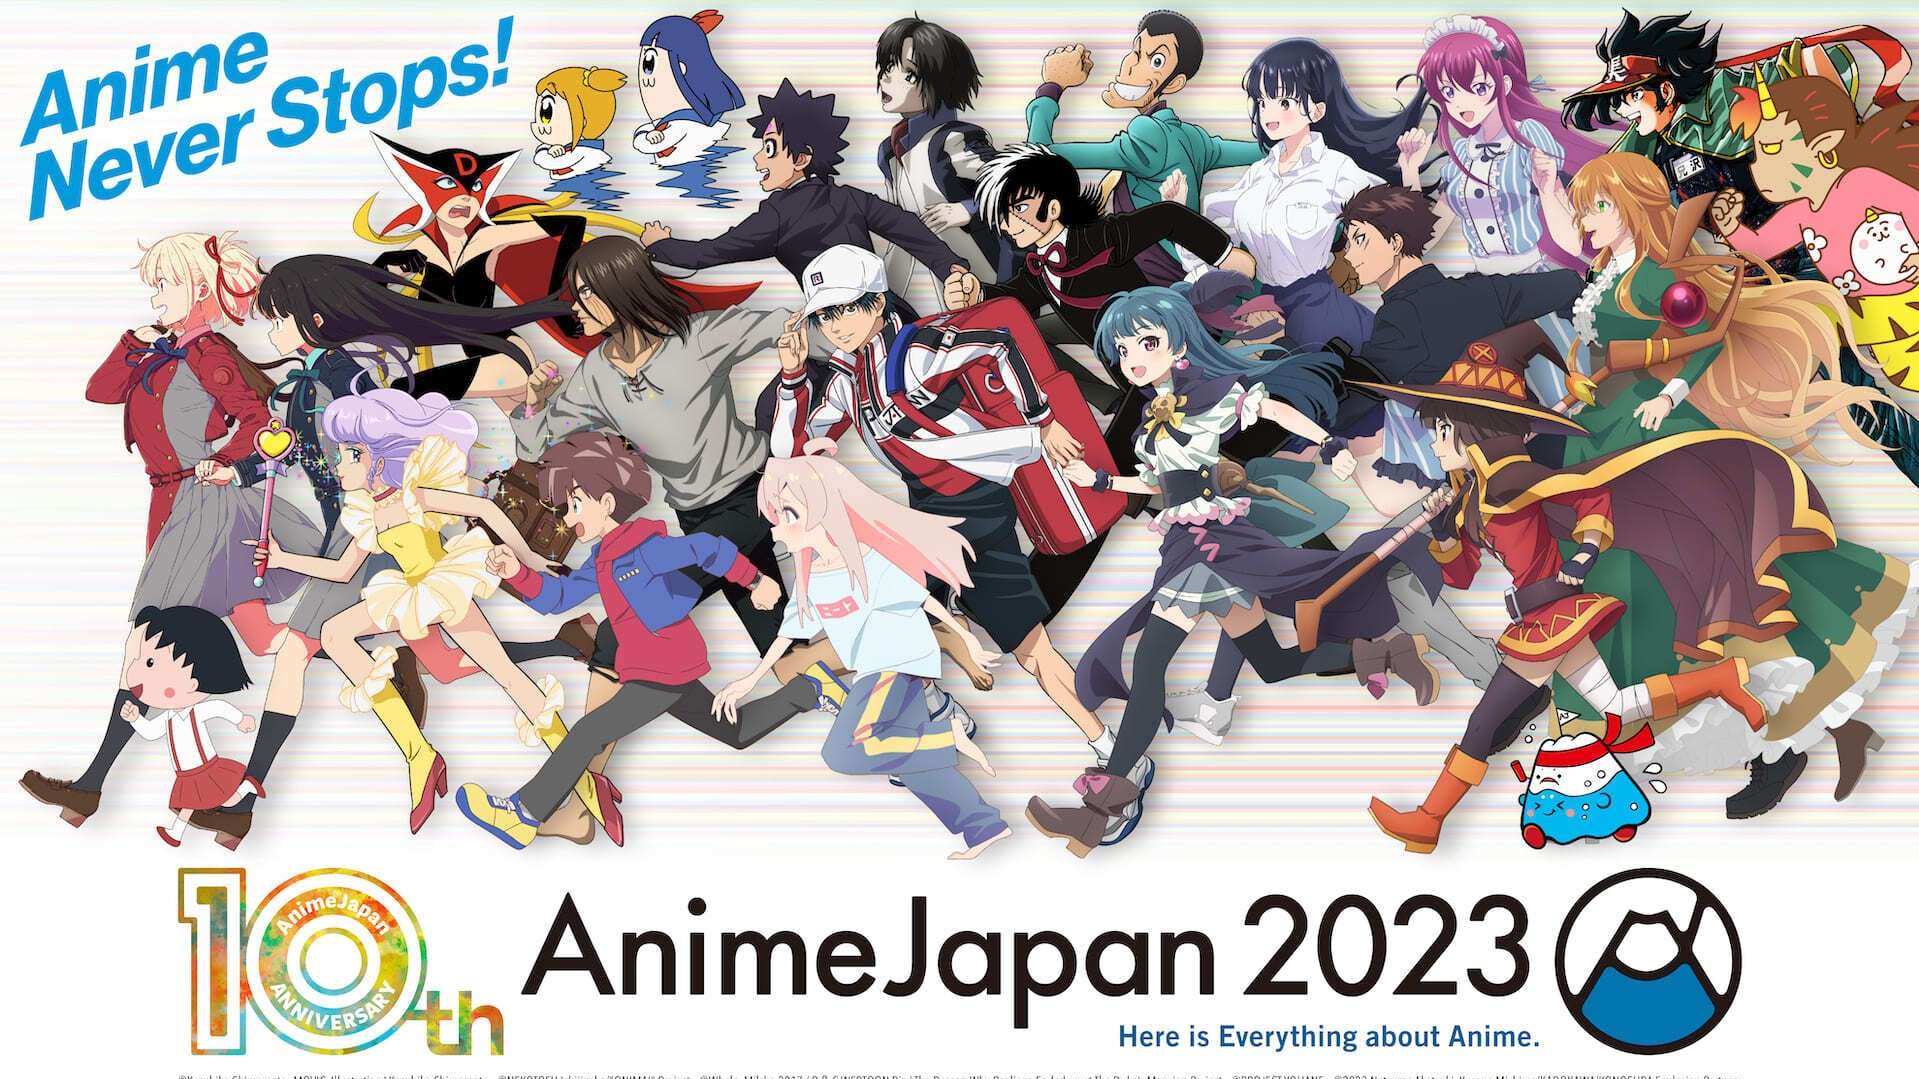 Promo image of Anime Japan 2023